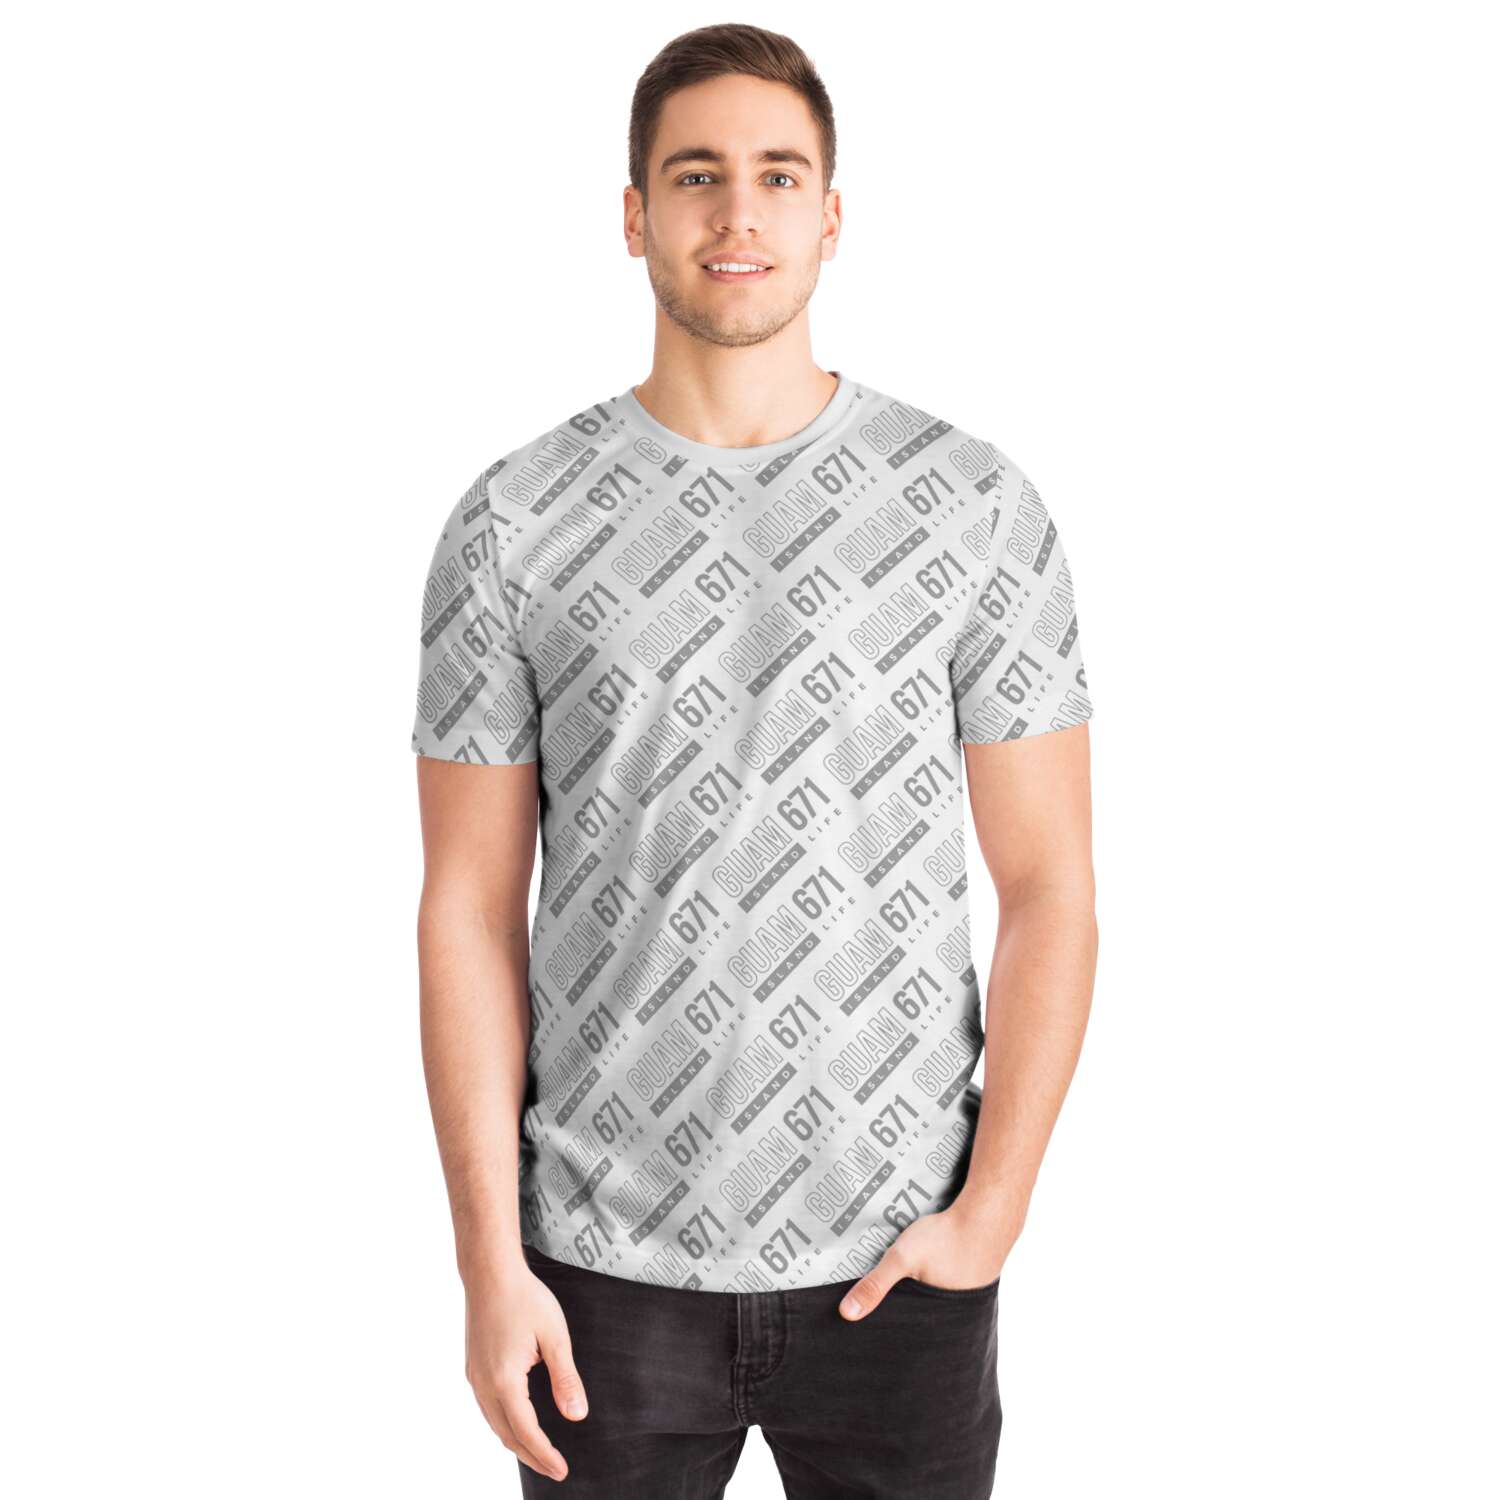 Guam 671 All Over Print Unisex T-Shirt